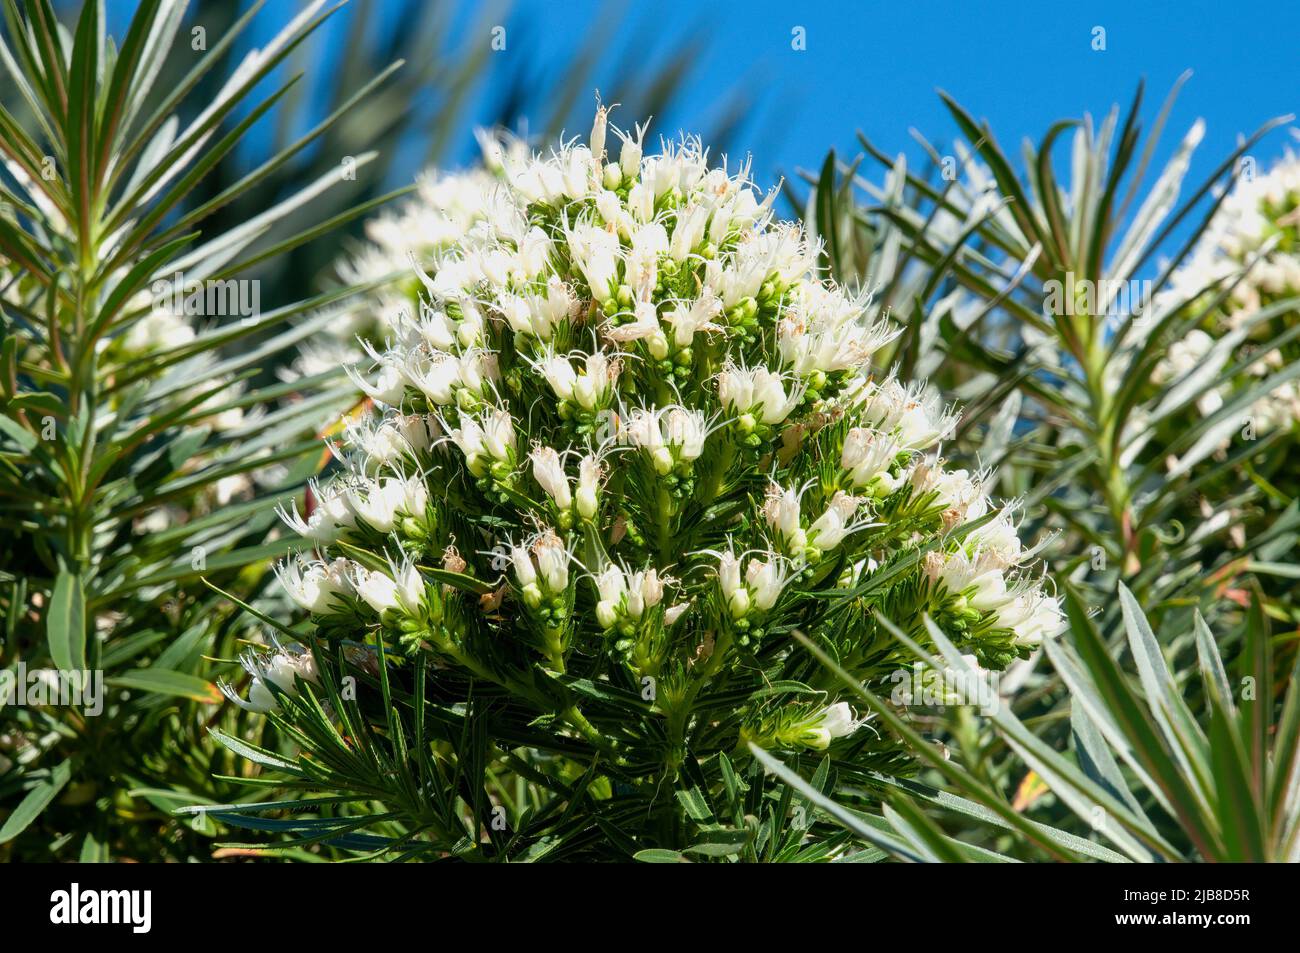 Sydney Australia, close-up of flower head of a echium leucophaeum or silver leaved echium native to Tenerife, Canary Islands Stock Photo